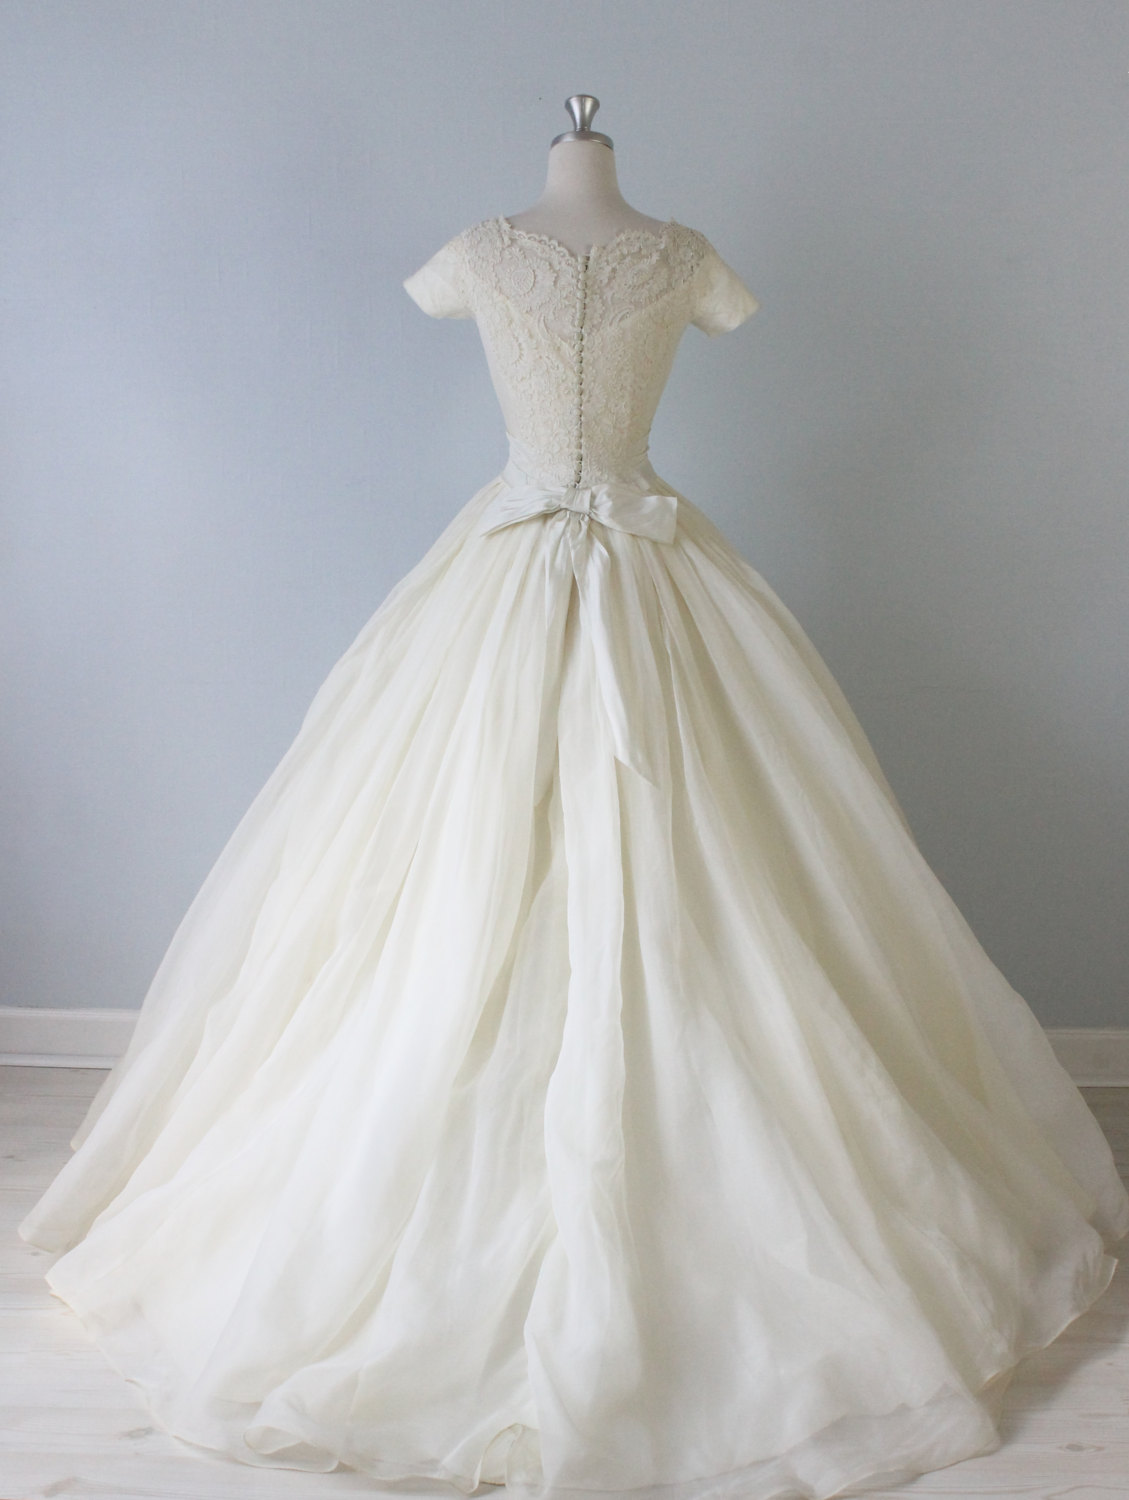 Vintage Wedding Dress from The Vintage Mistress - 1950s Ballgown 